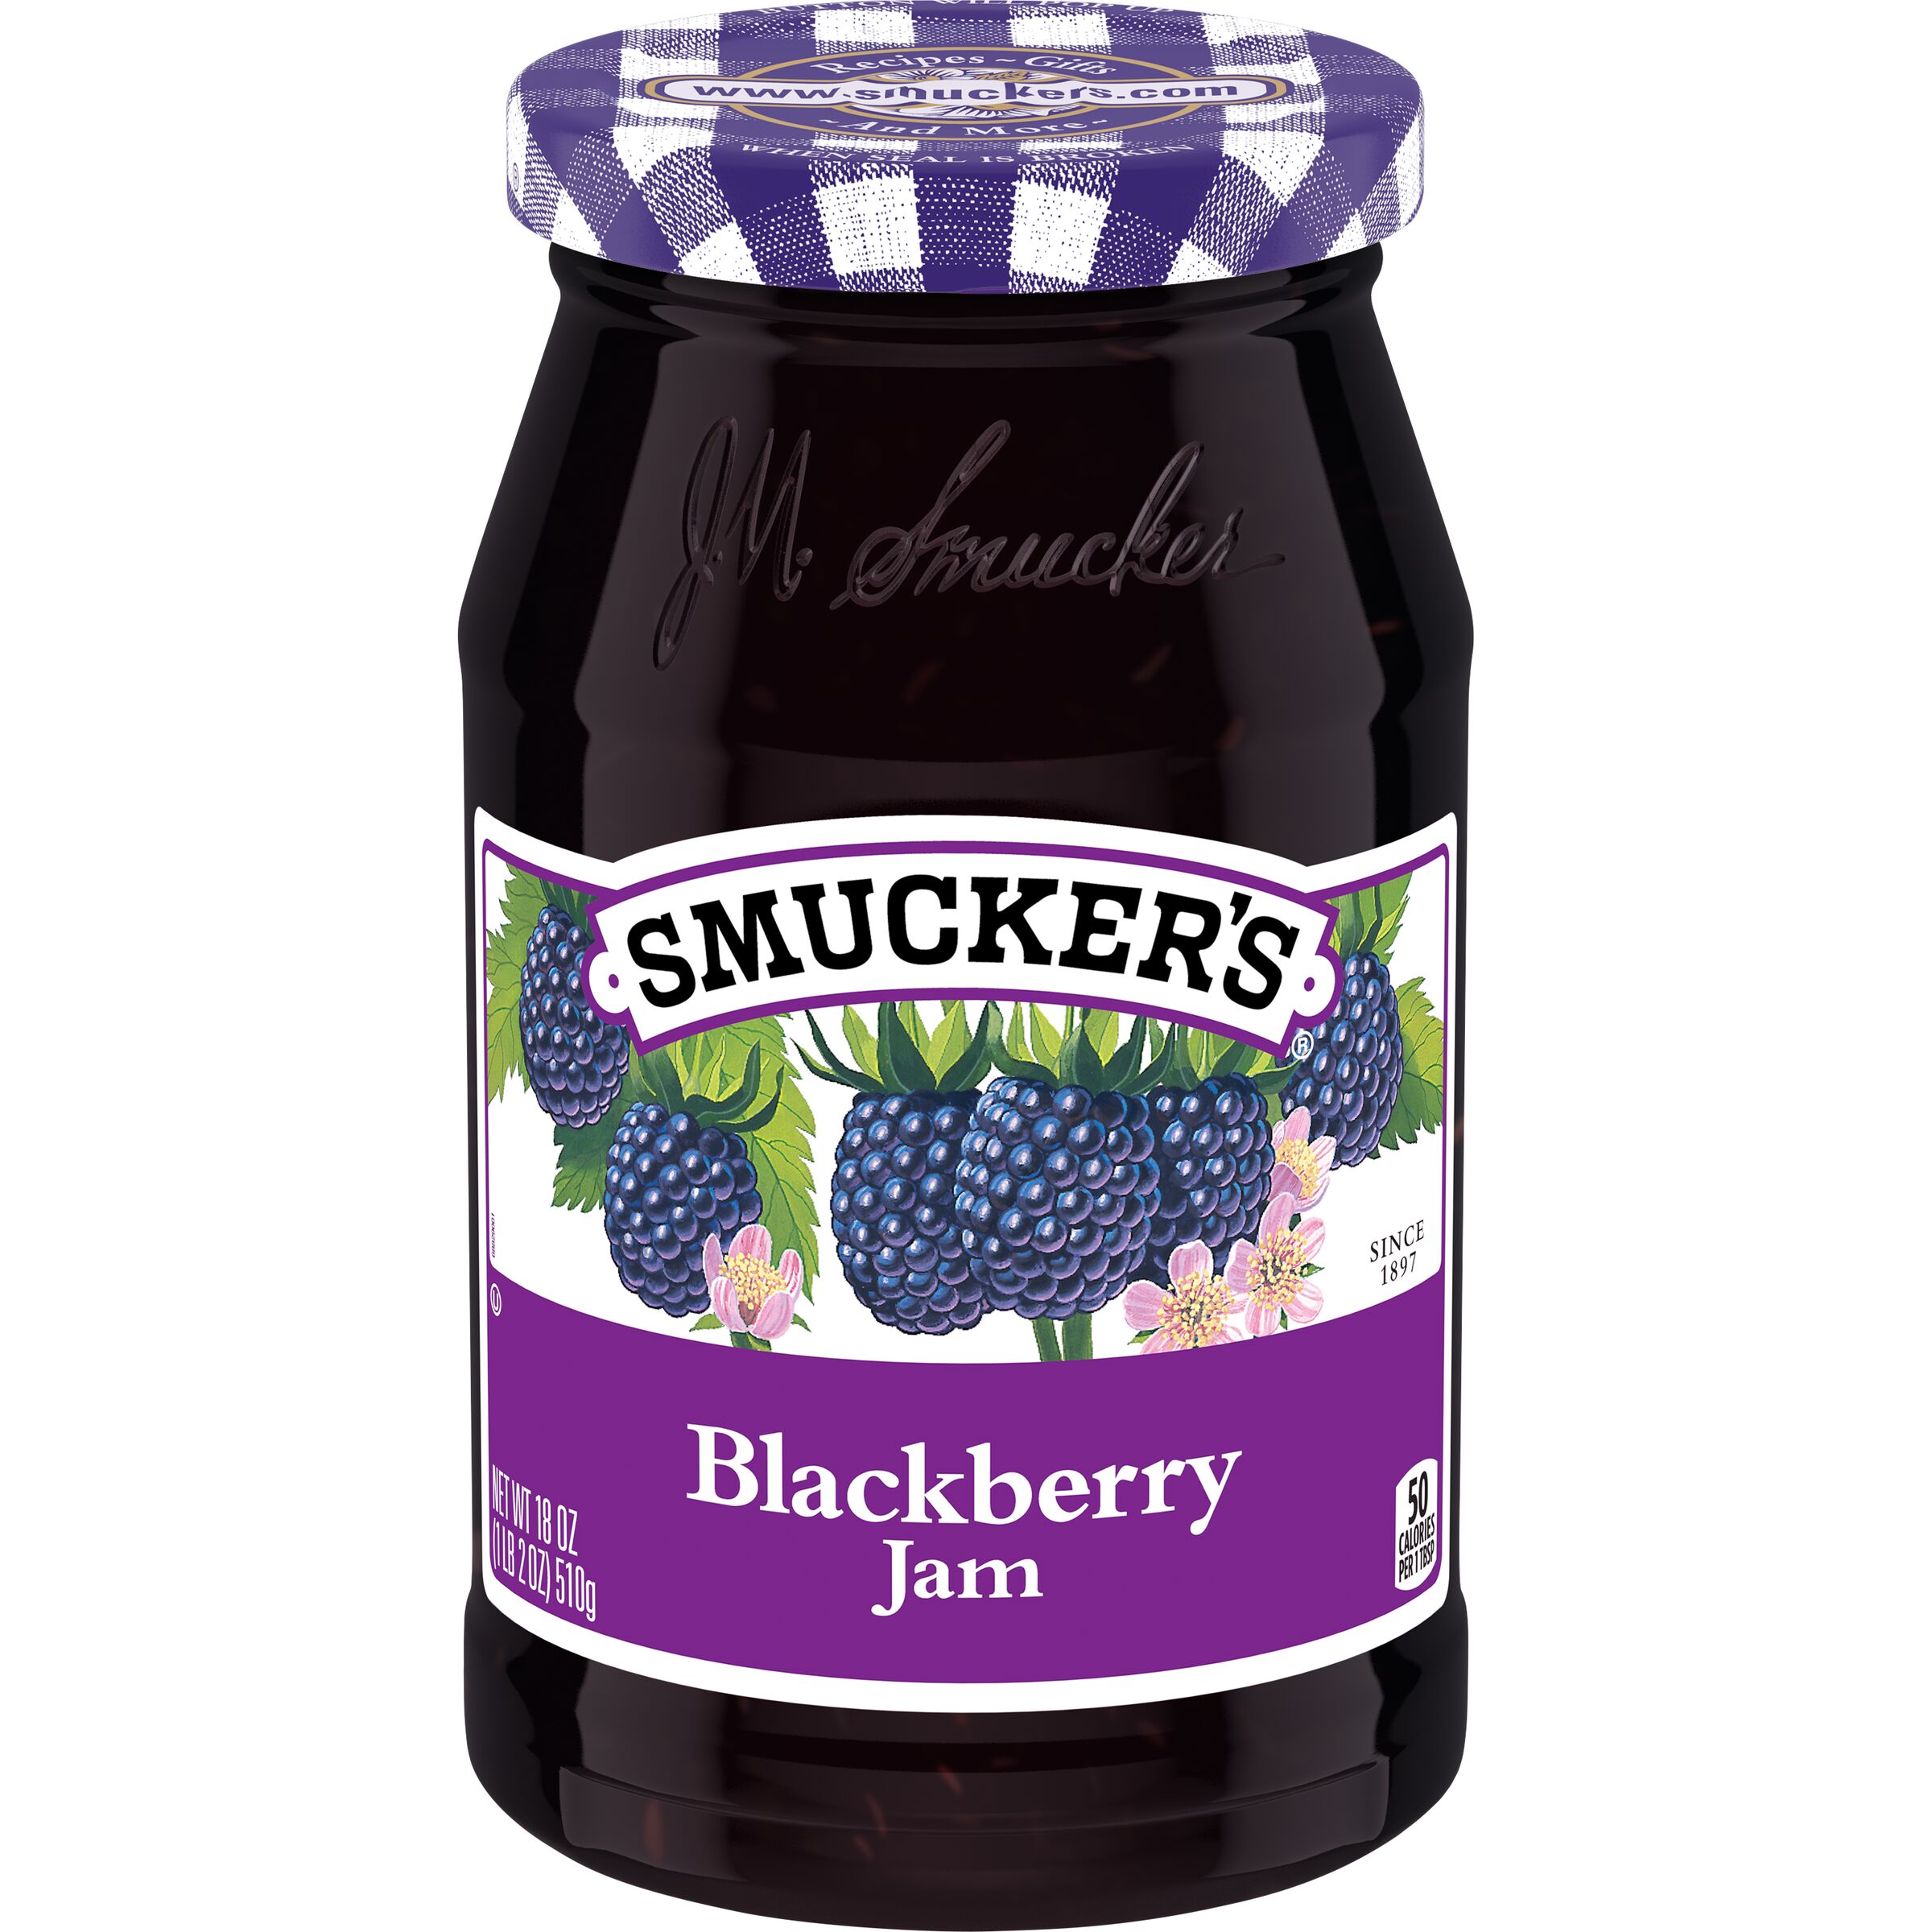 Smucker's Blackberry Jam, 18 Ounces - image 1 of 7